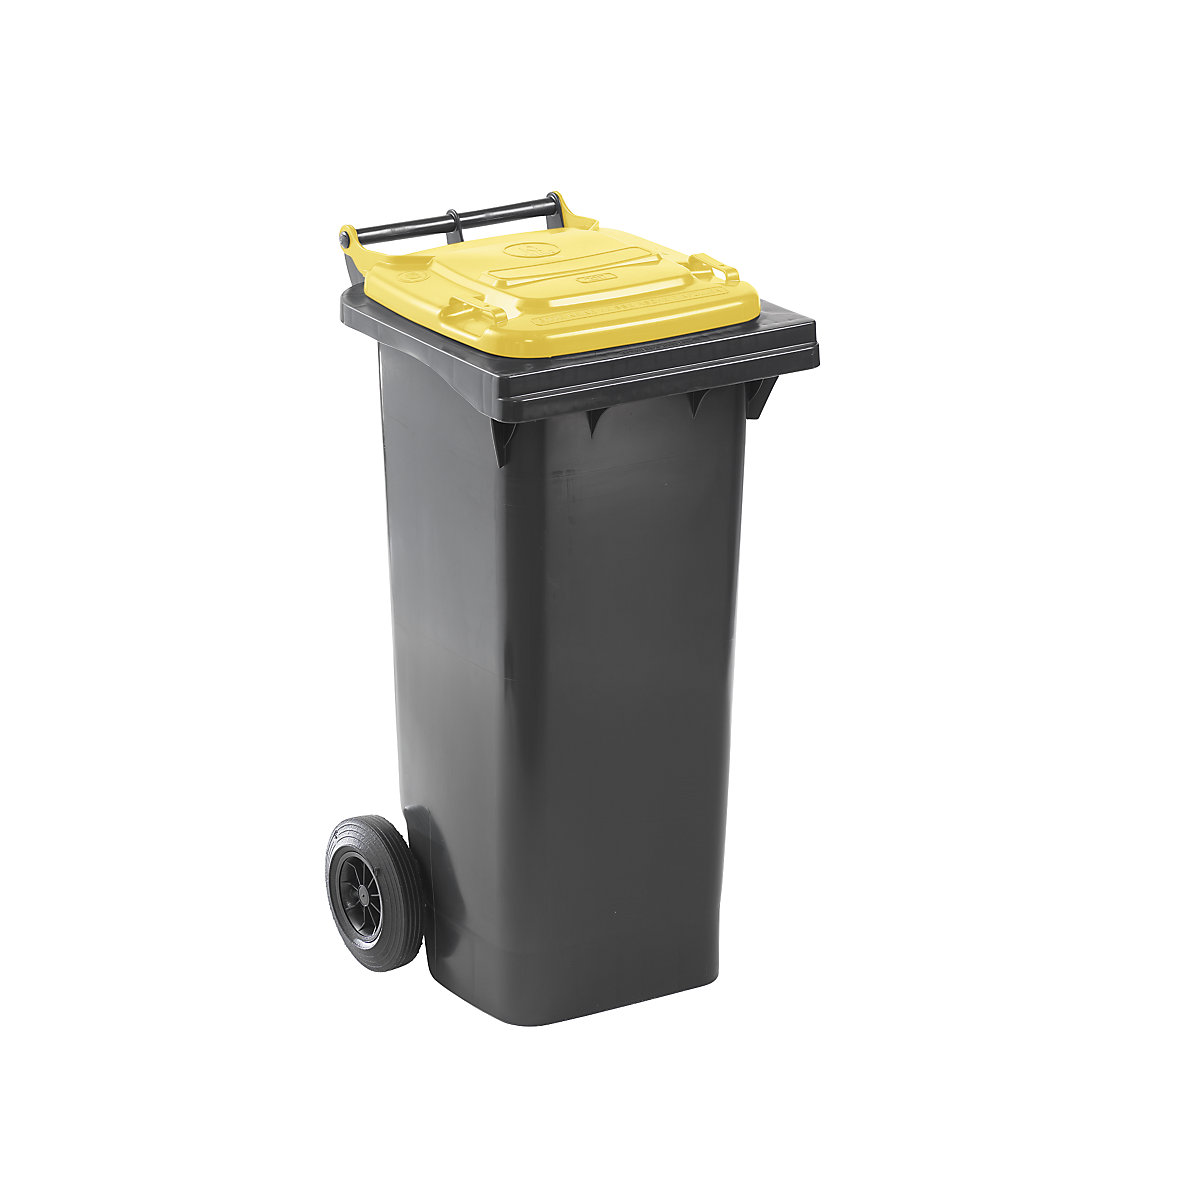 Contentor de lixo conforme a norma DIN EN 840, capacidade 80 l, LxAxP 448 x 975 x 530 mm, antracite, tampa amarela